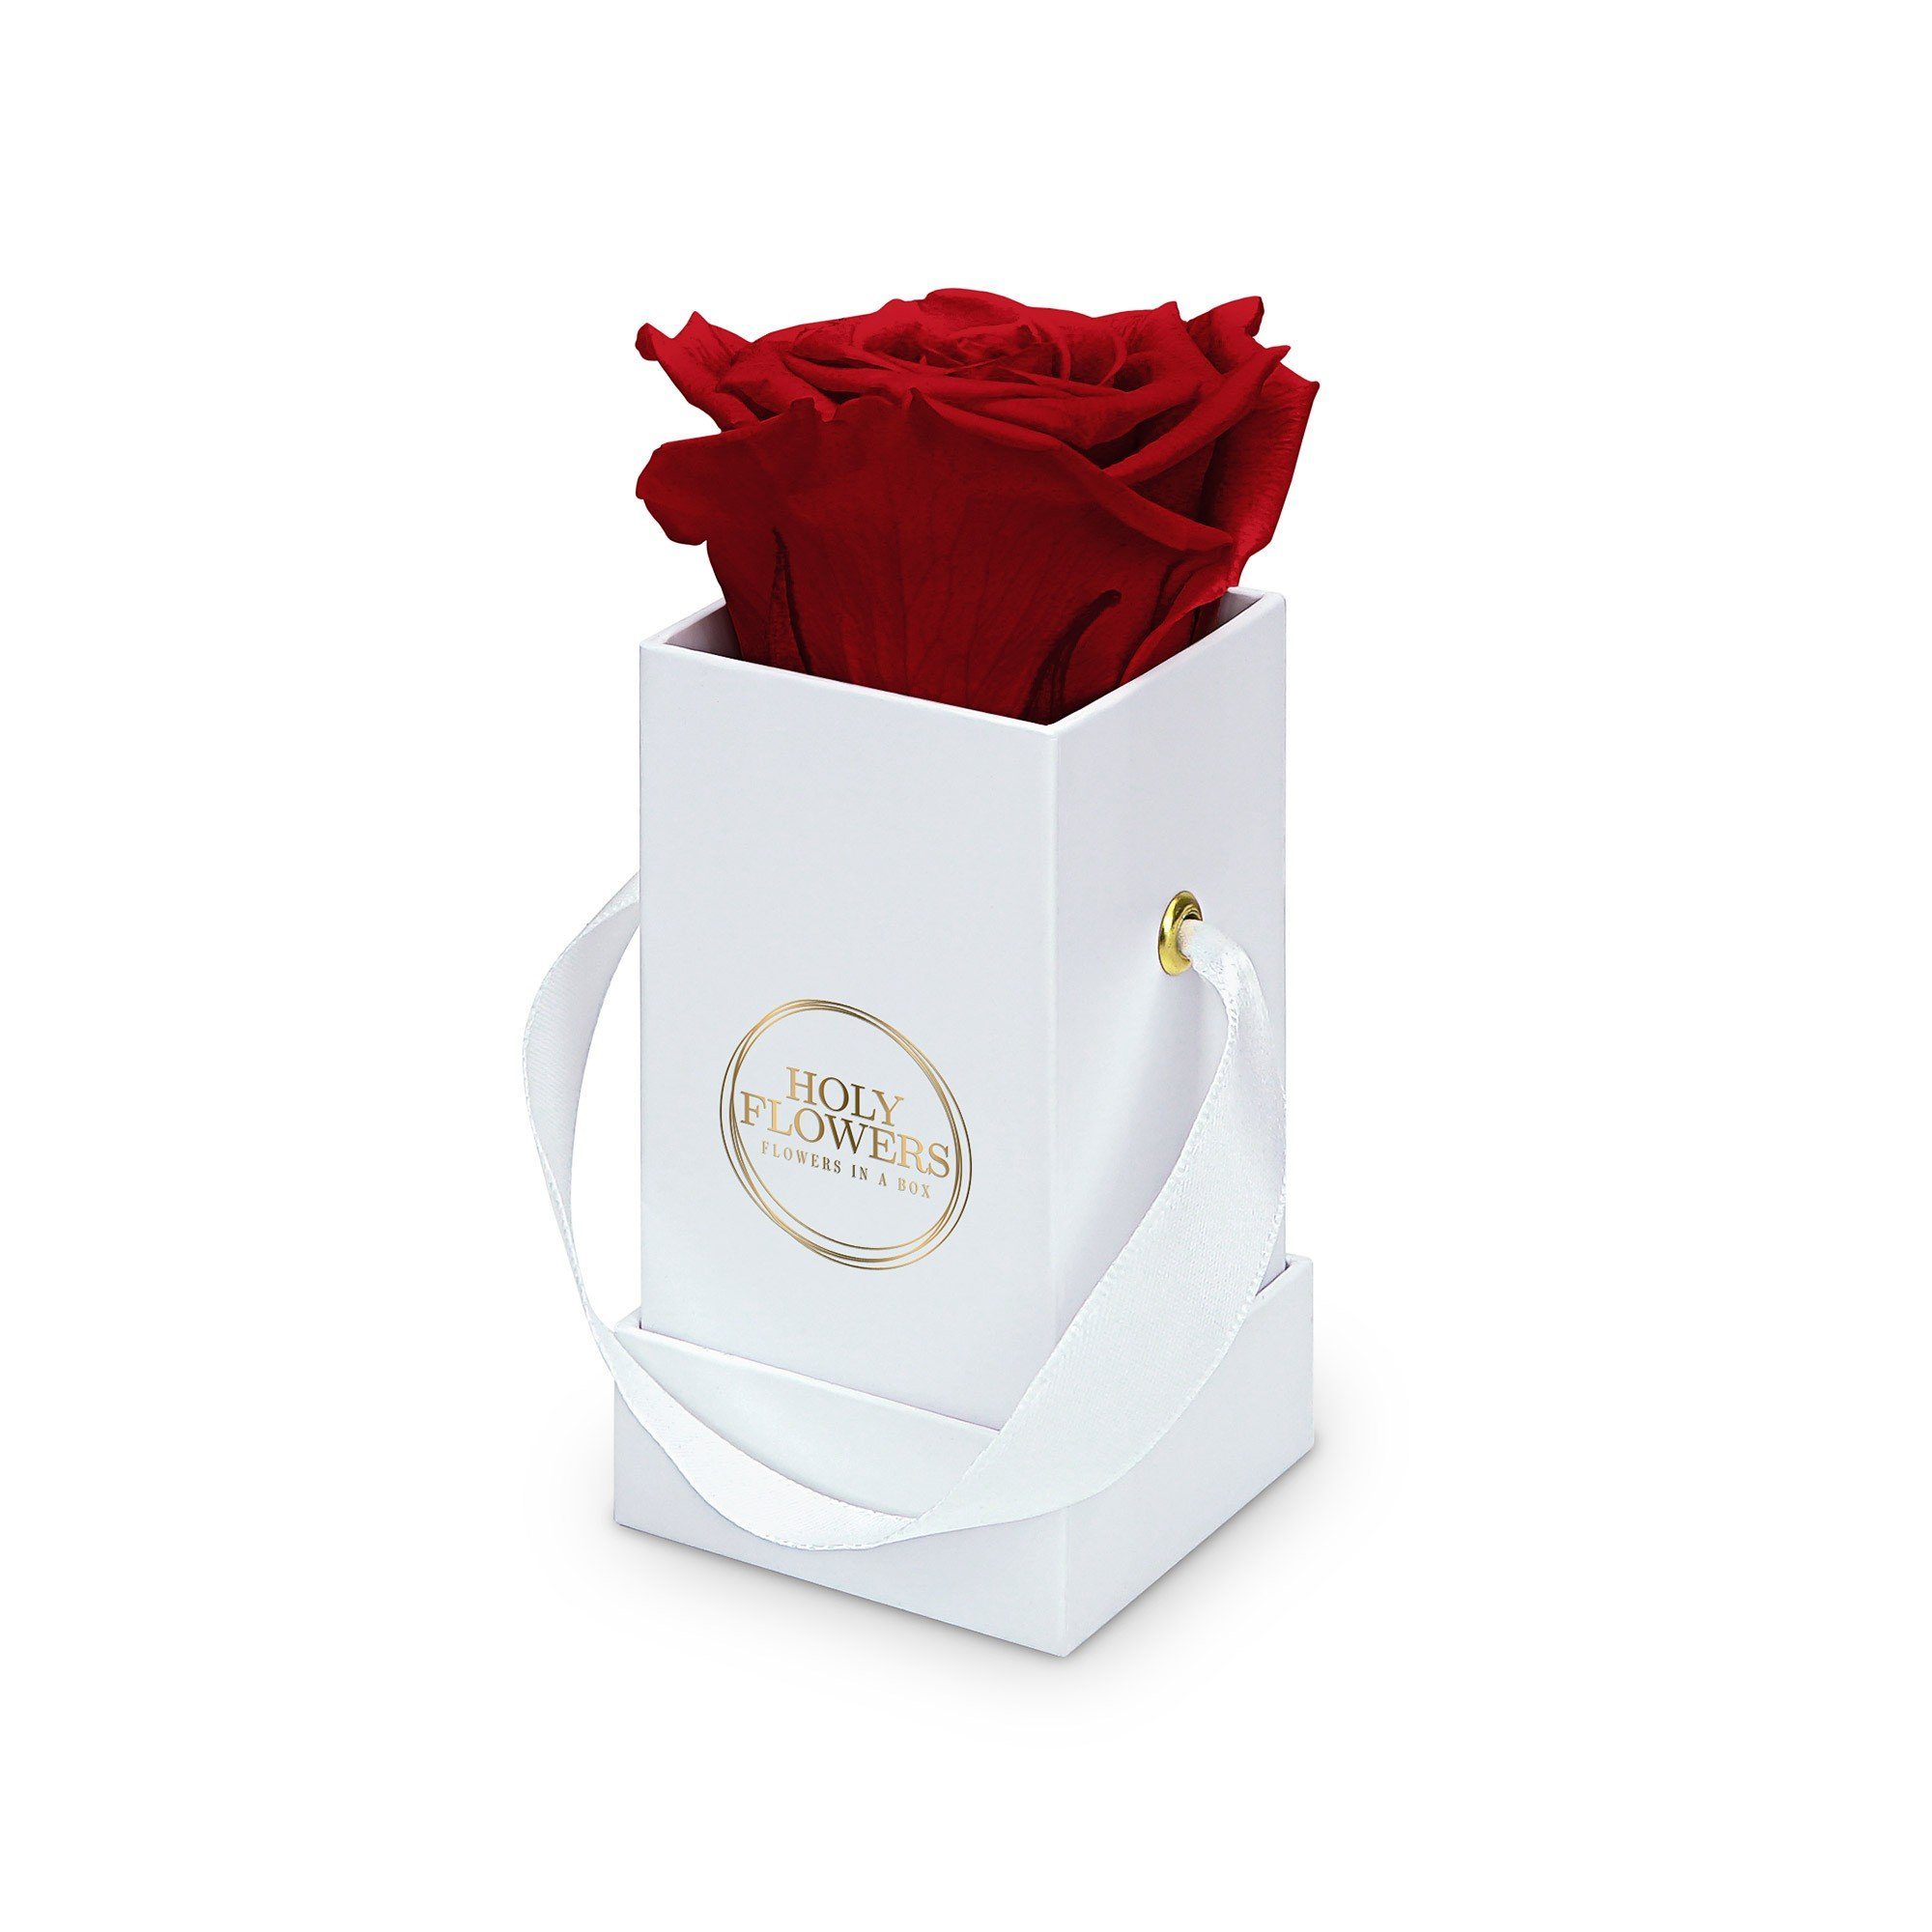 Kunstblume Eckige Rosenbox in weiß mit 1er Infinity Rose I 3 Jahre haltbar I Echte, duftende konservierte Blumen I by Raul Richter Infinity Rose, Holy Flowers, Höhe 9 cm Heritage Red